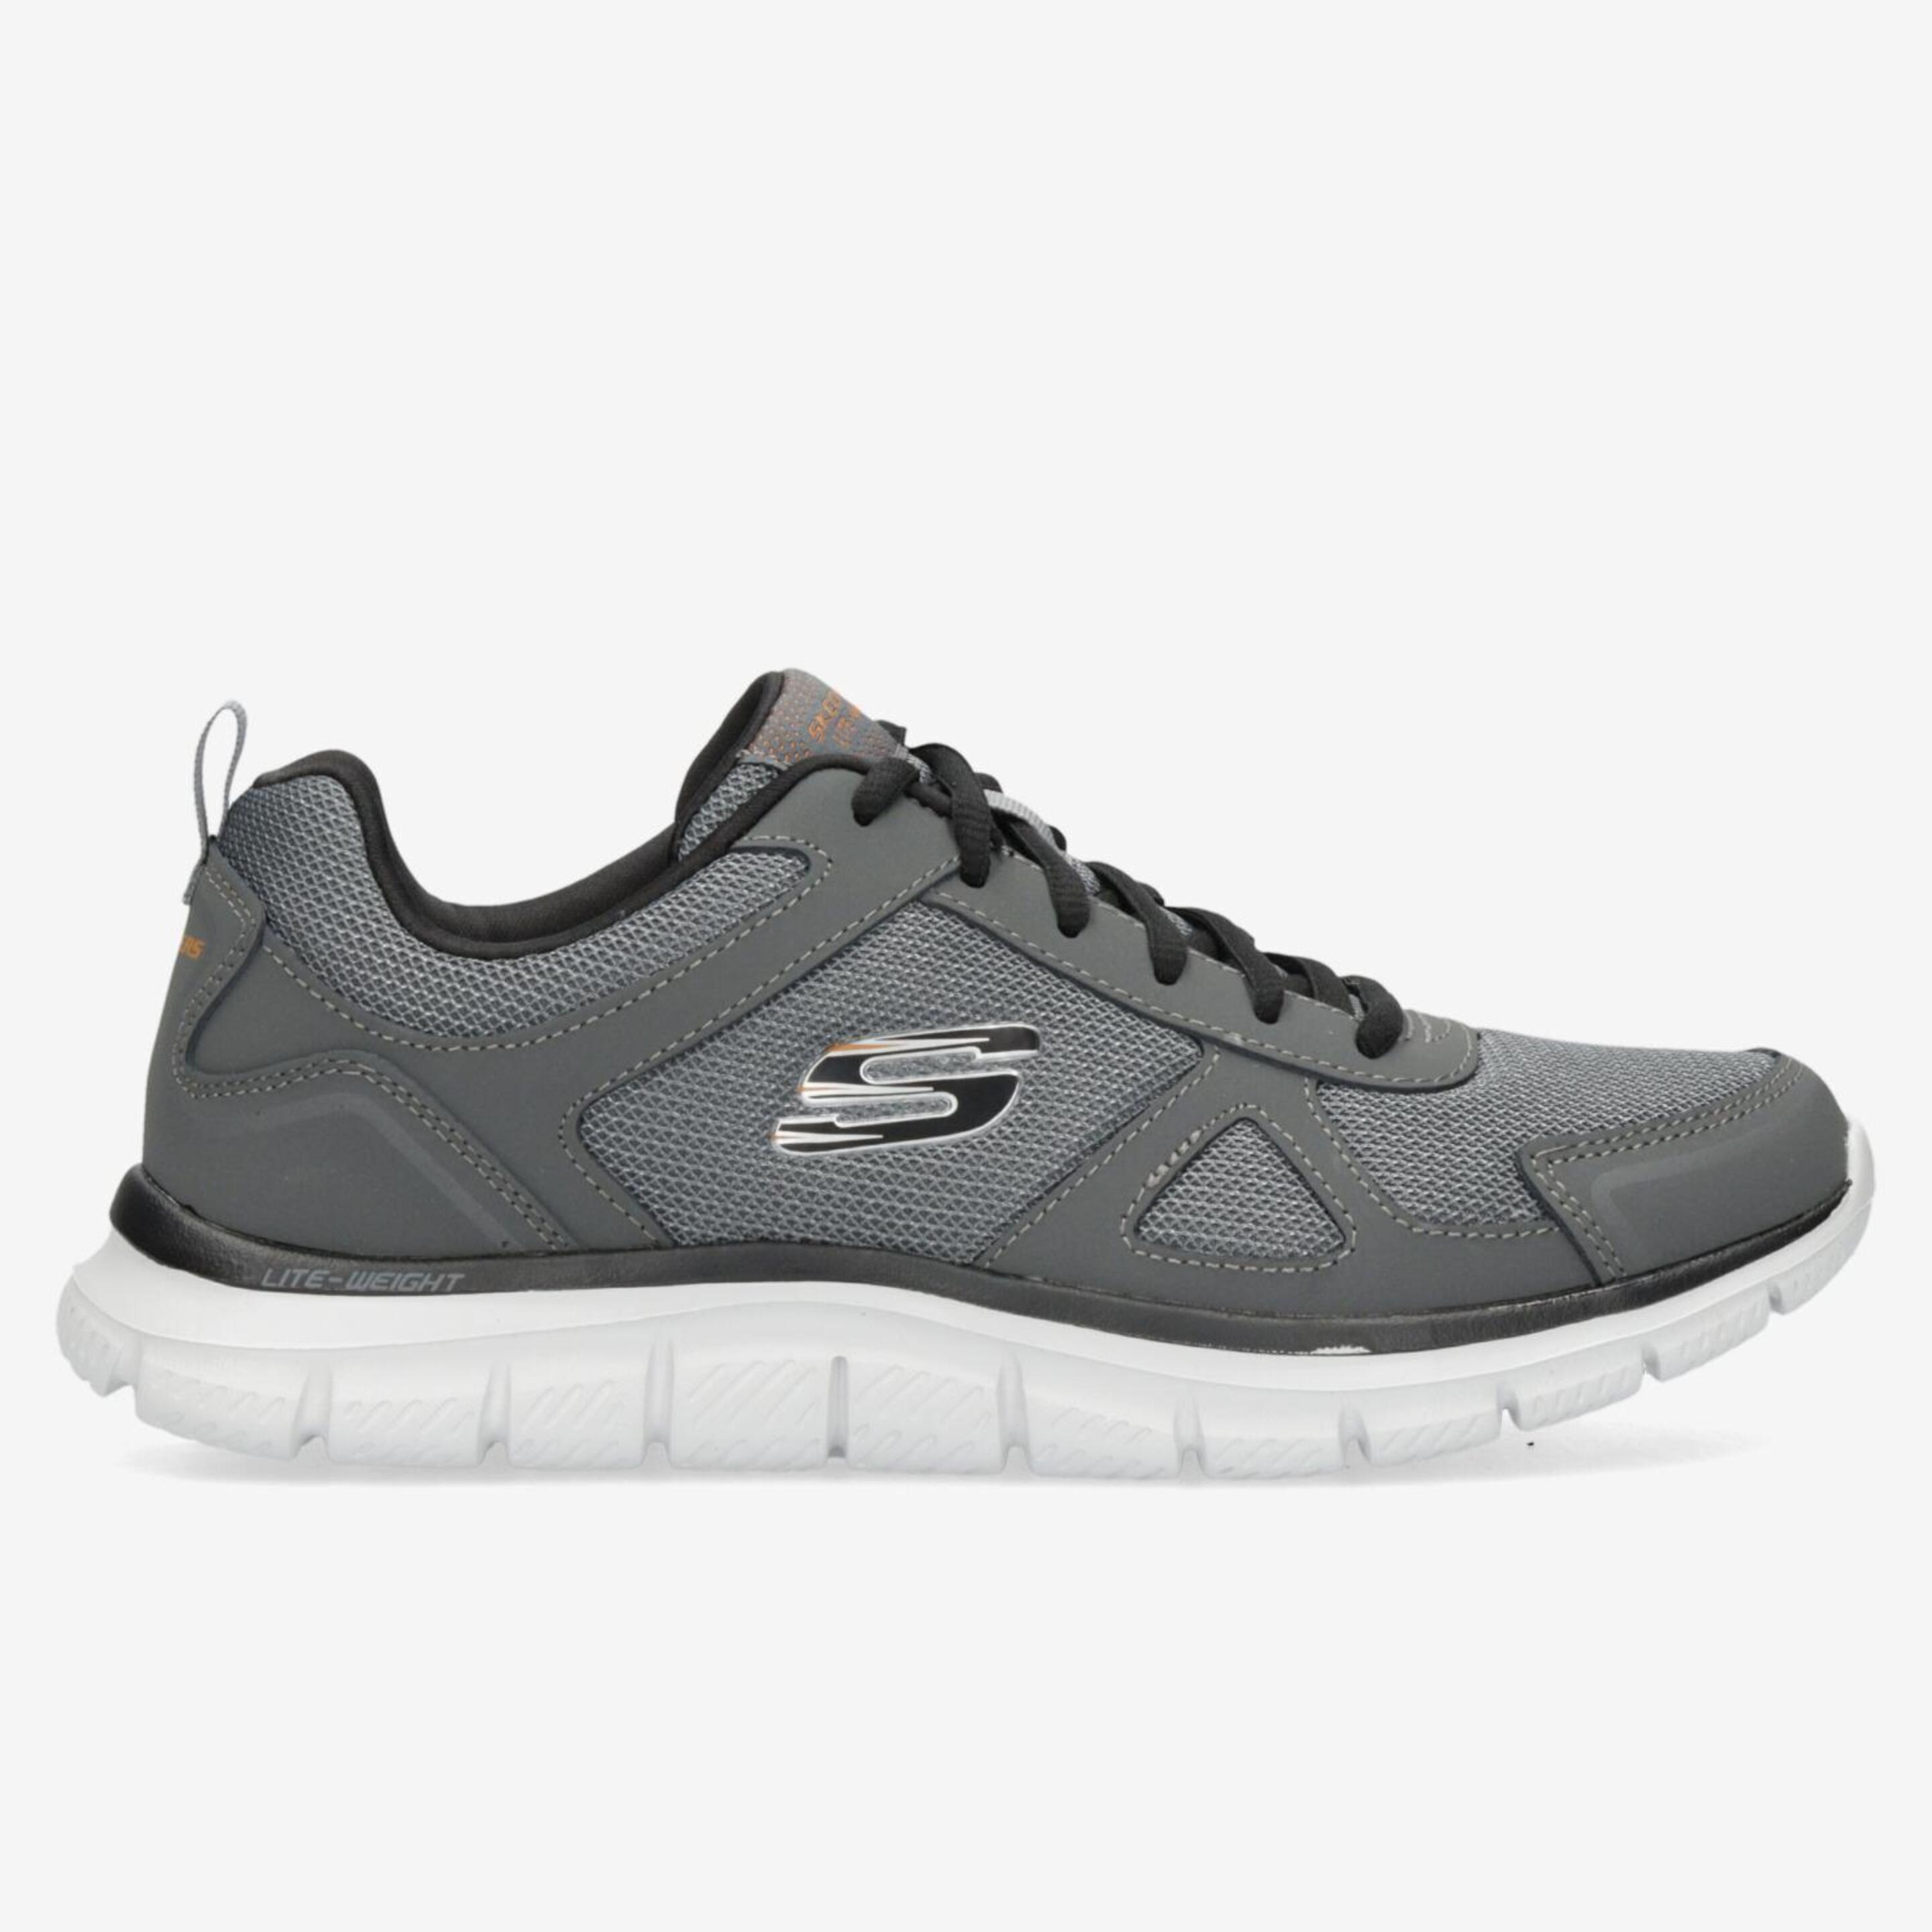 Skechers Track-scloric. Charcoal/black. 52631/ccbk - gris - 